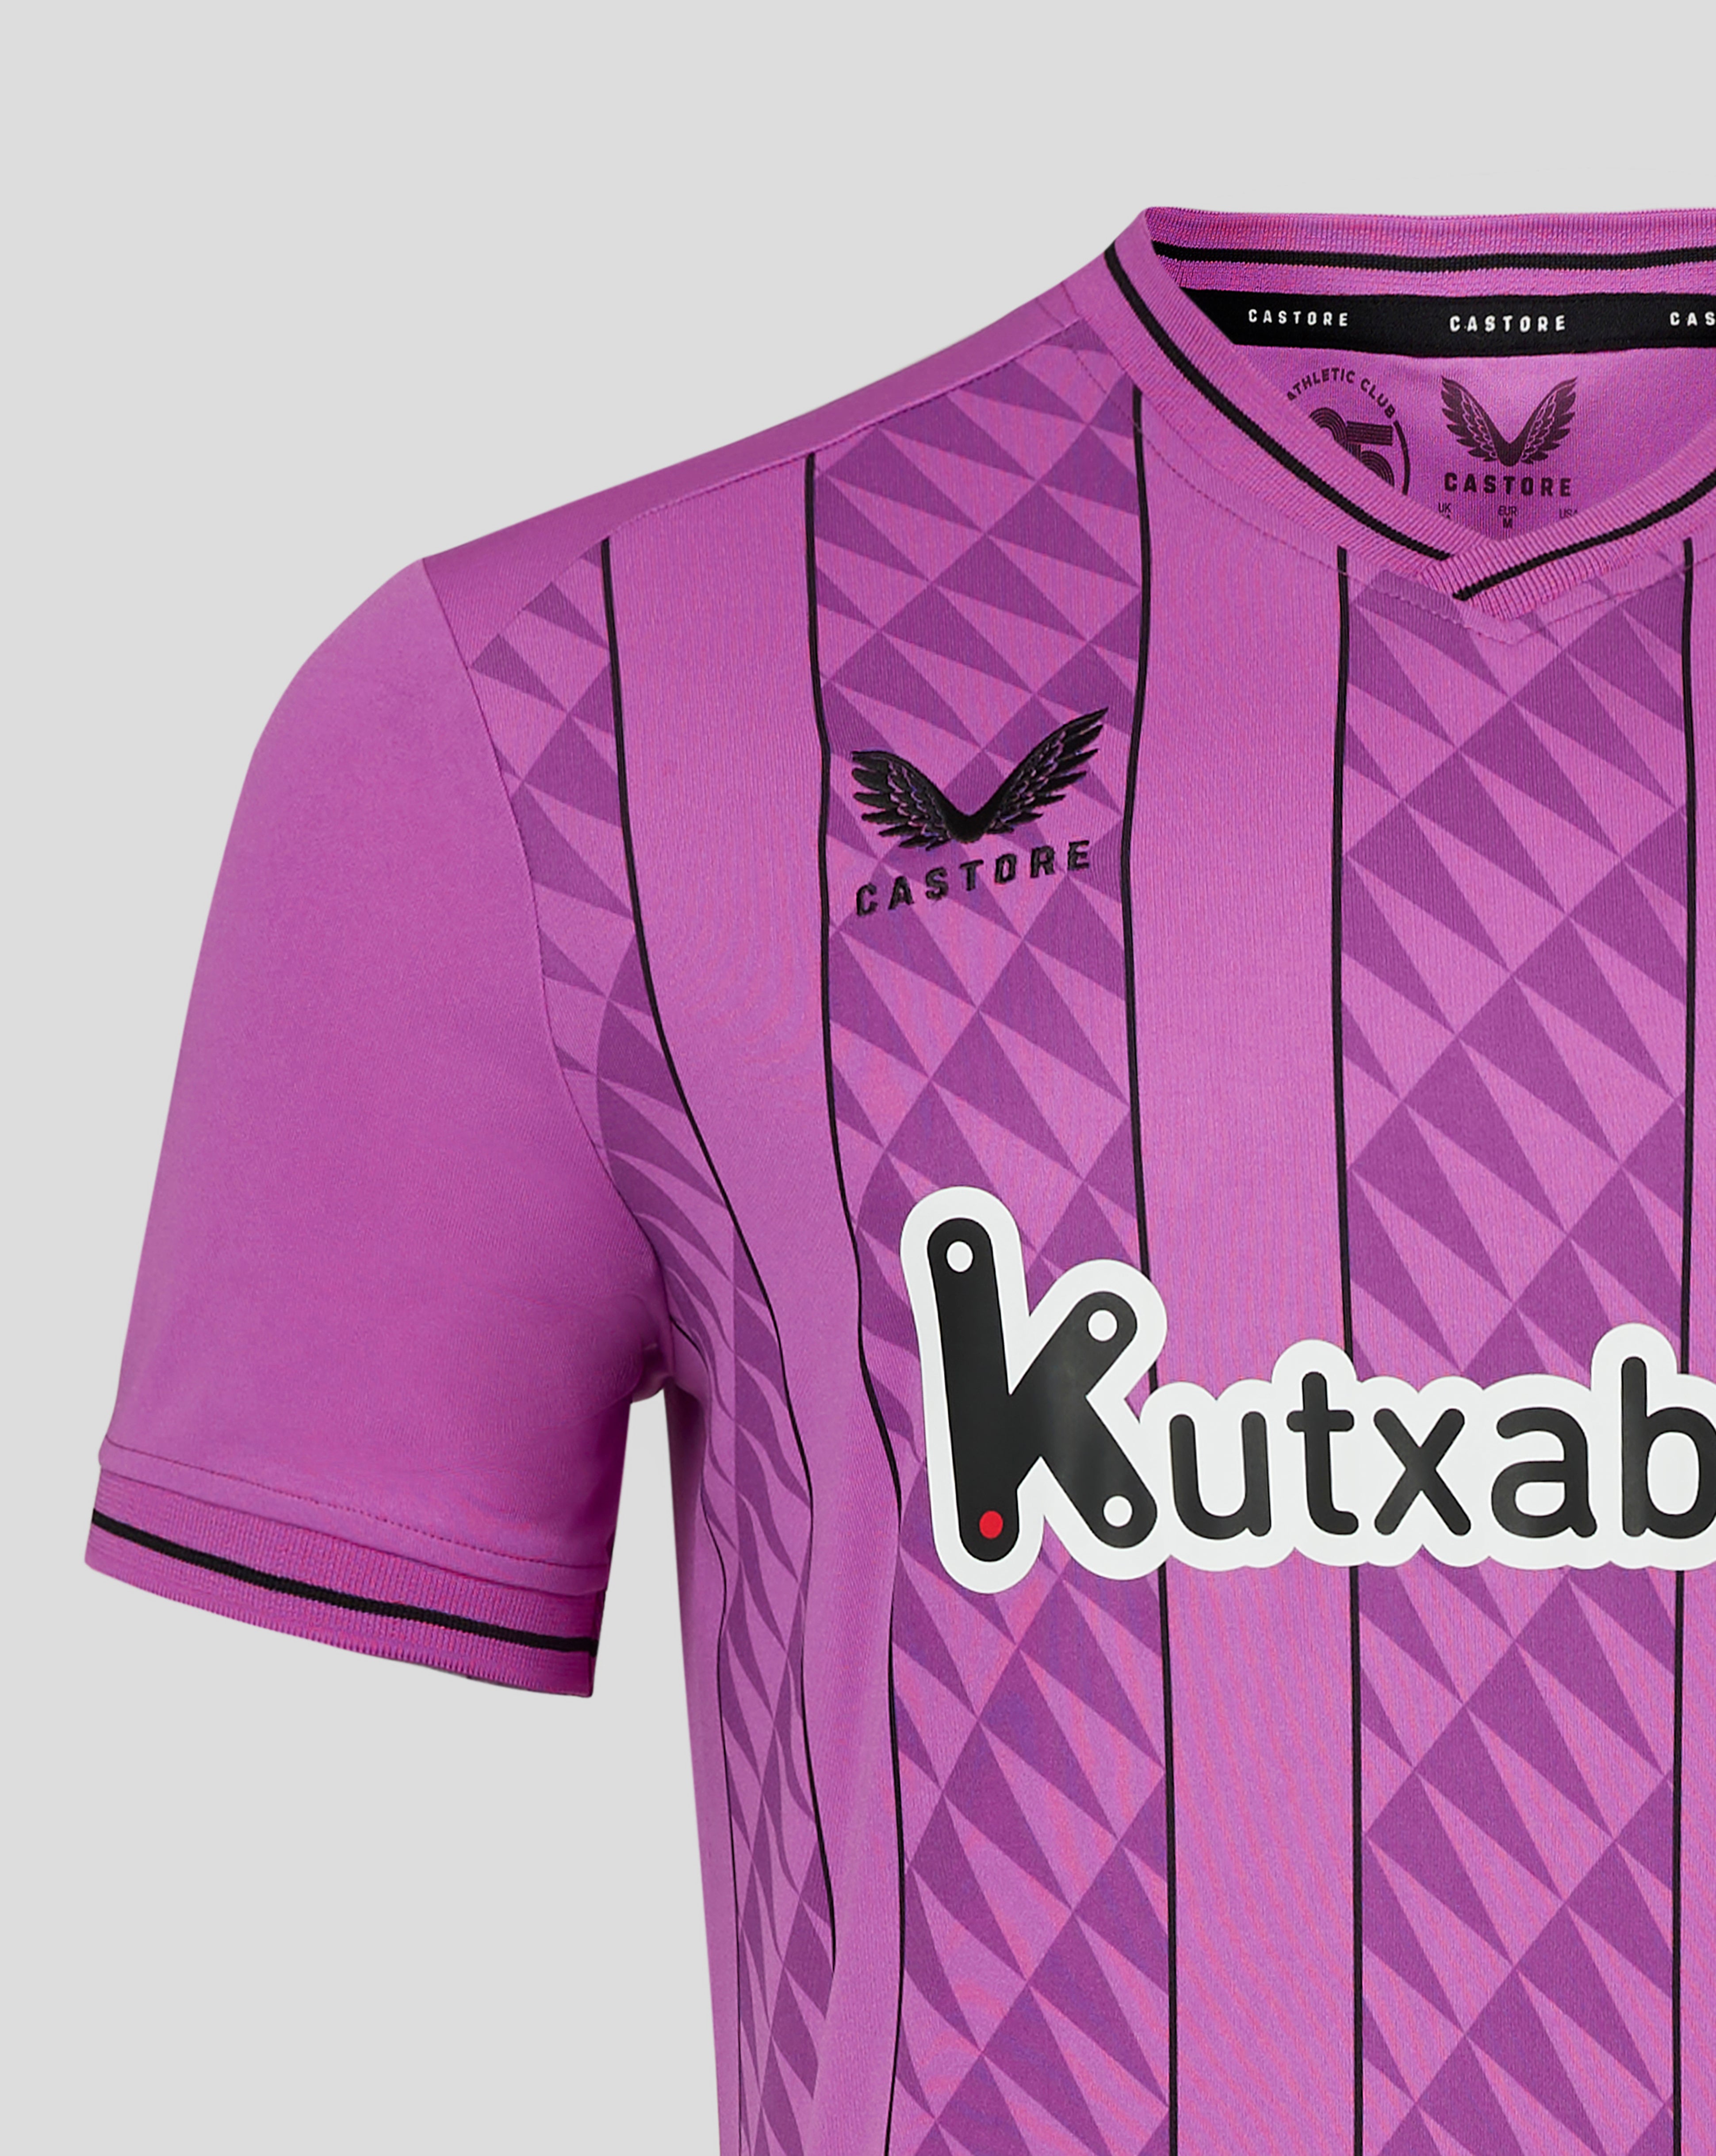 Men’s Athletic Club Away Replica Short Sleeve Goalkeeper Shirt